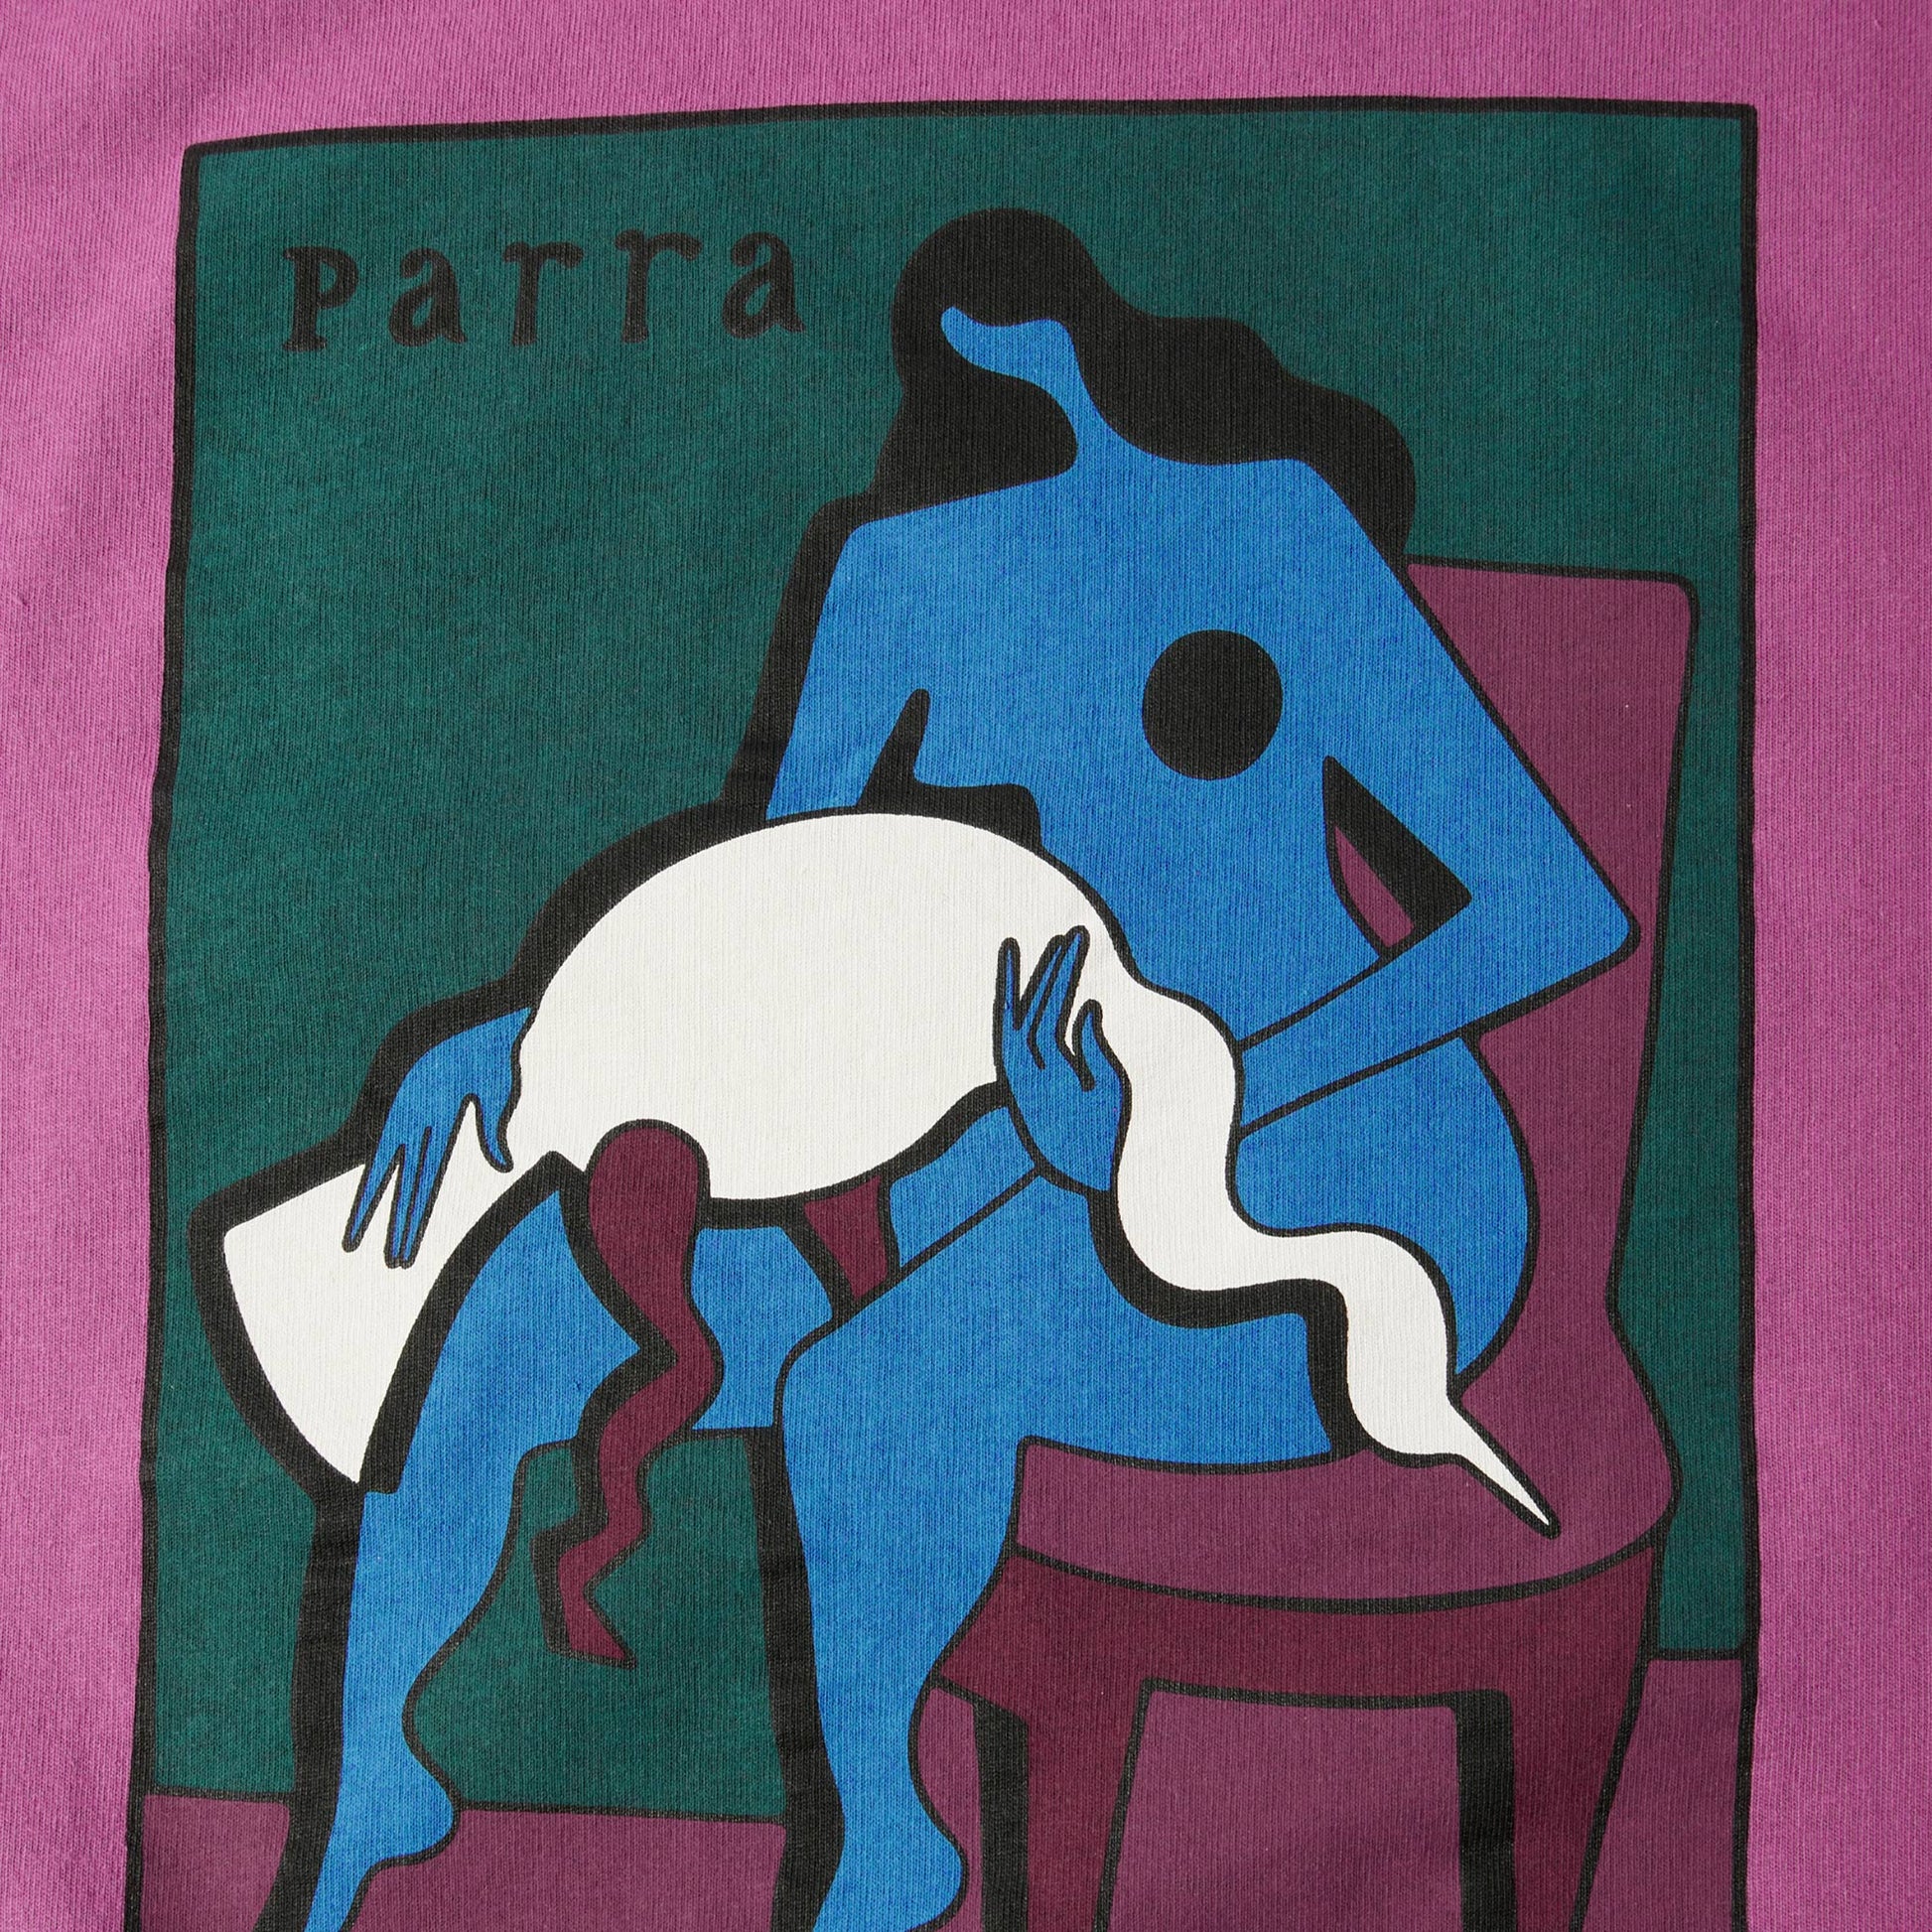 byParra My Dear Swan T-Shirt in der Farbe pink